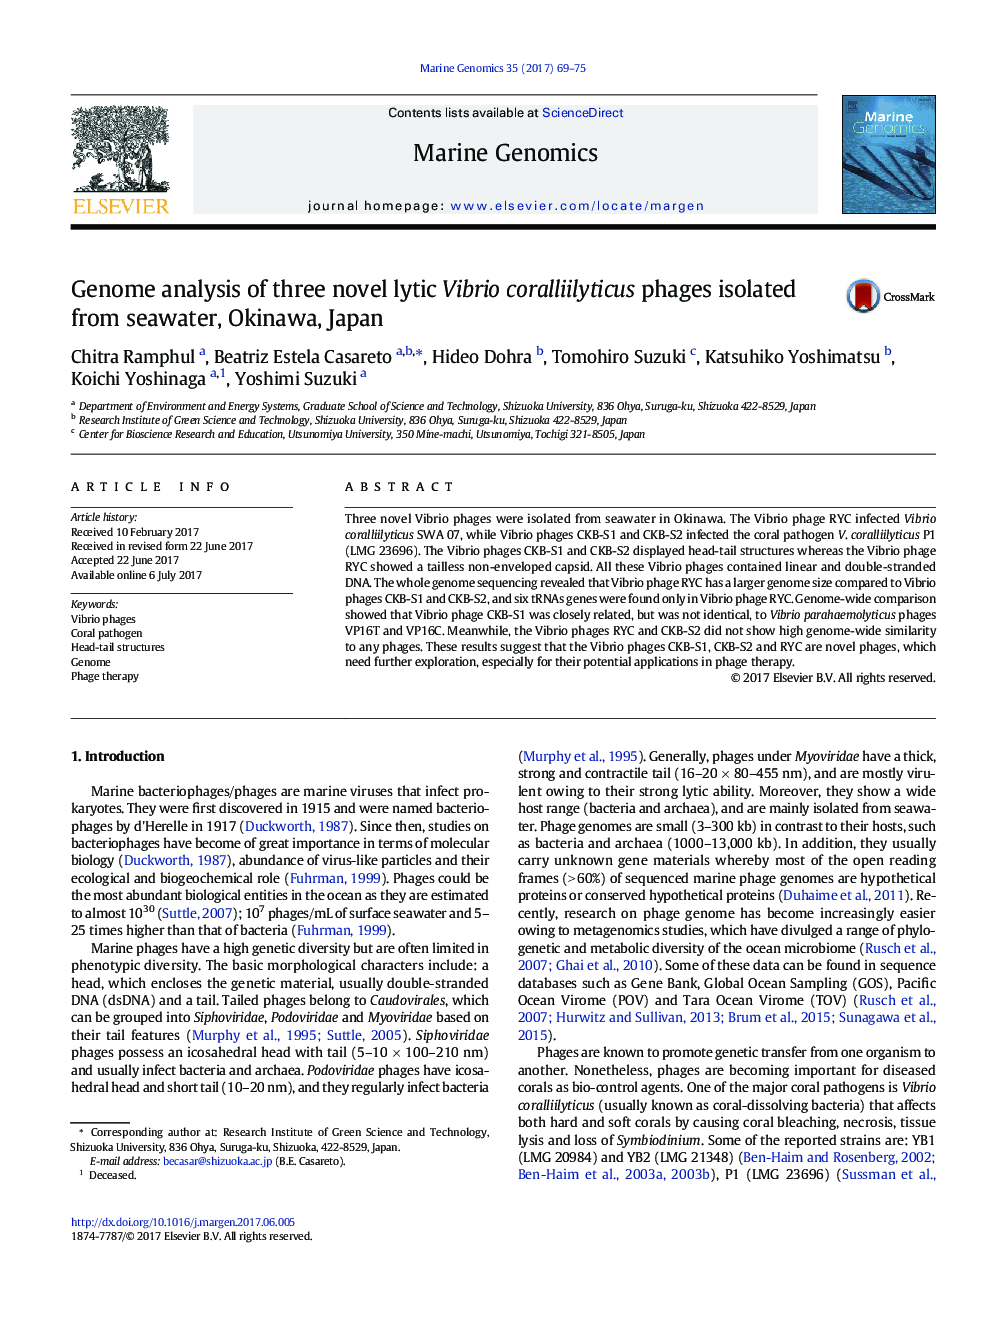 Genome analysis of three novel lytic Vibrio coralliilyticus phages isolated from seawater, Okinawa, Japan